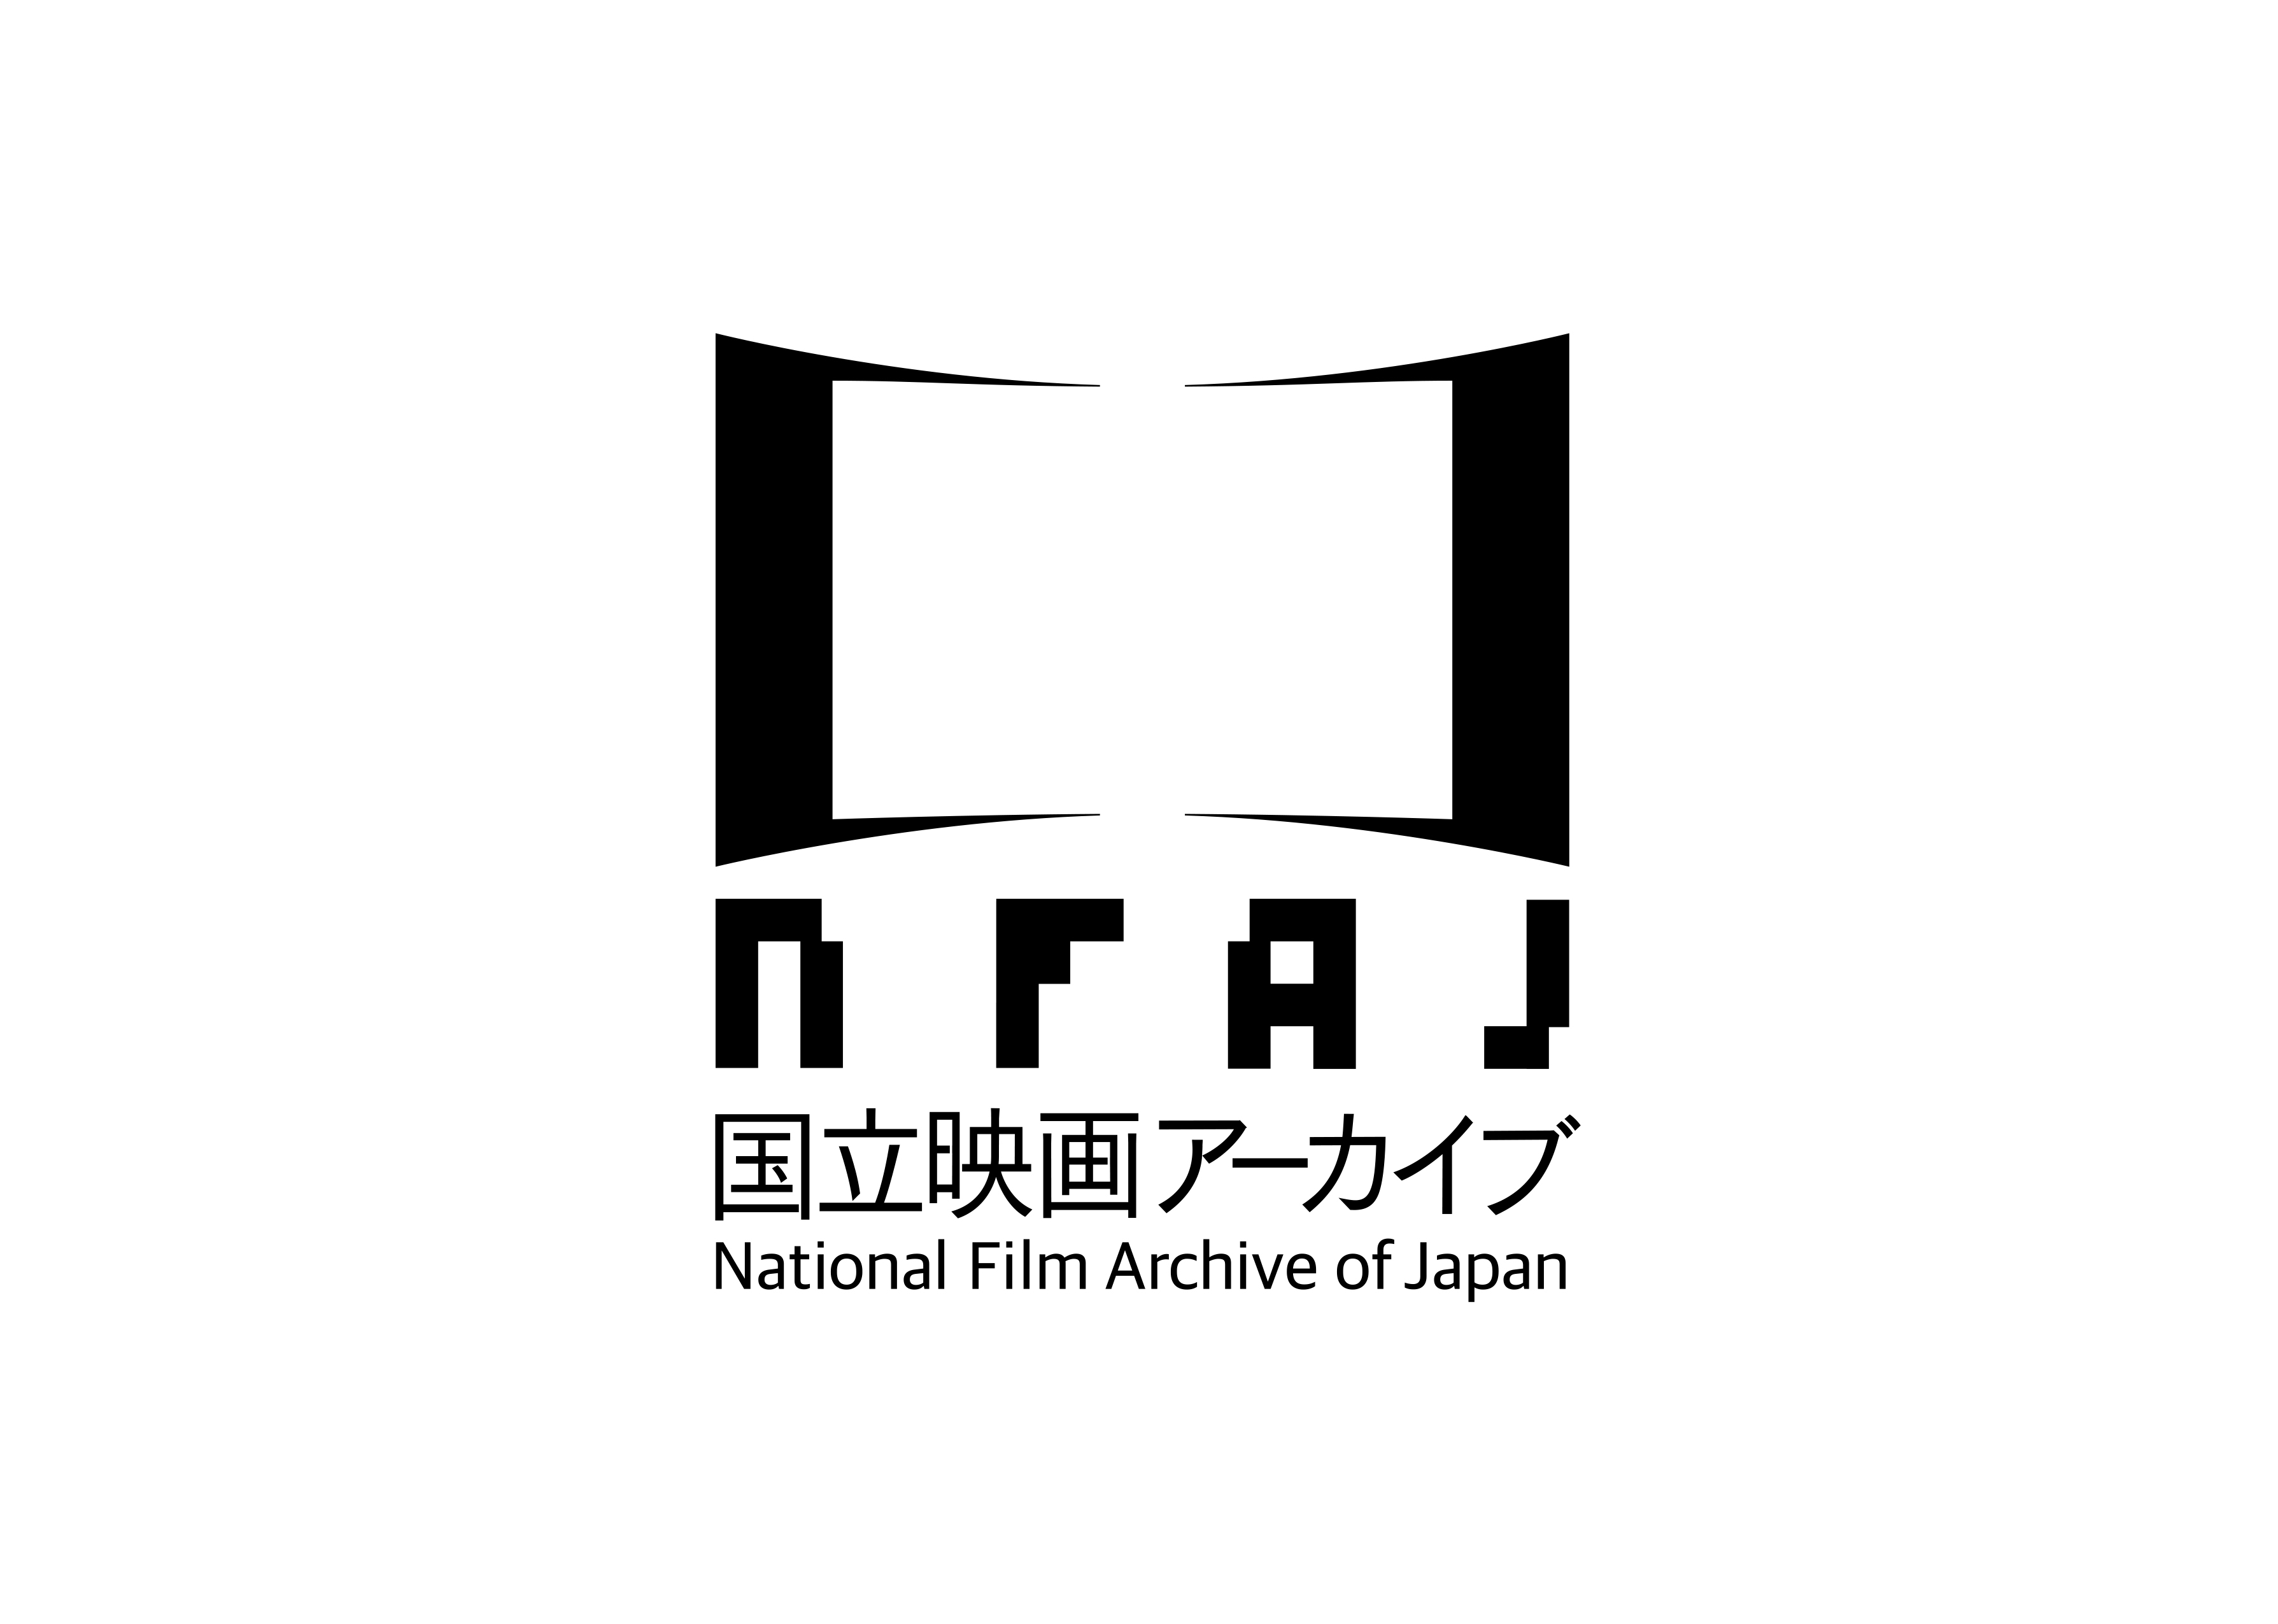 National Film Archive Japan